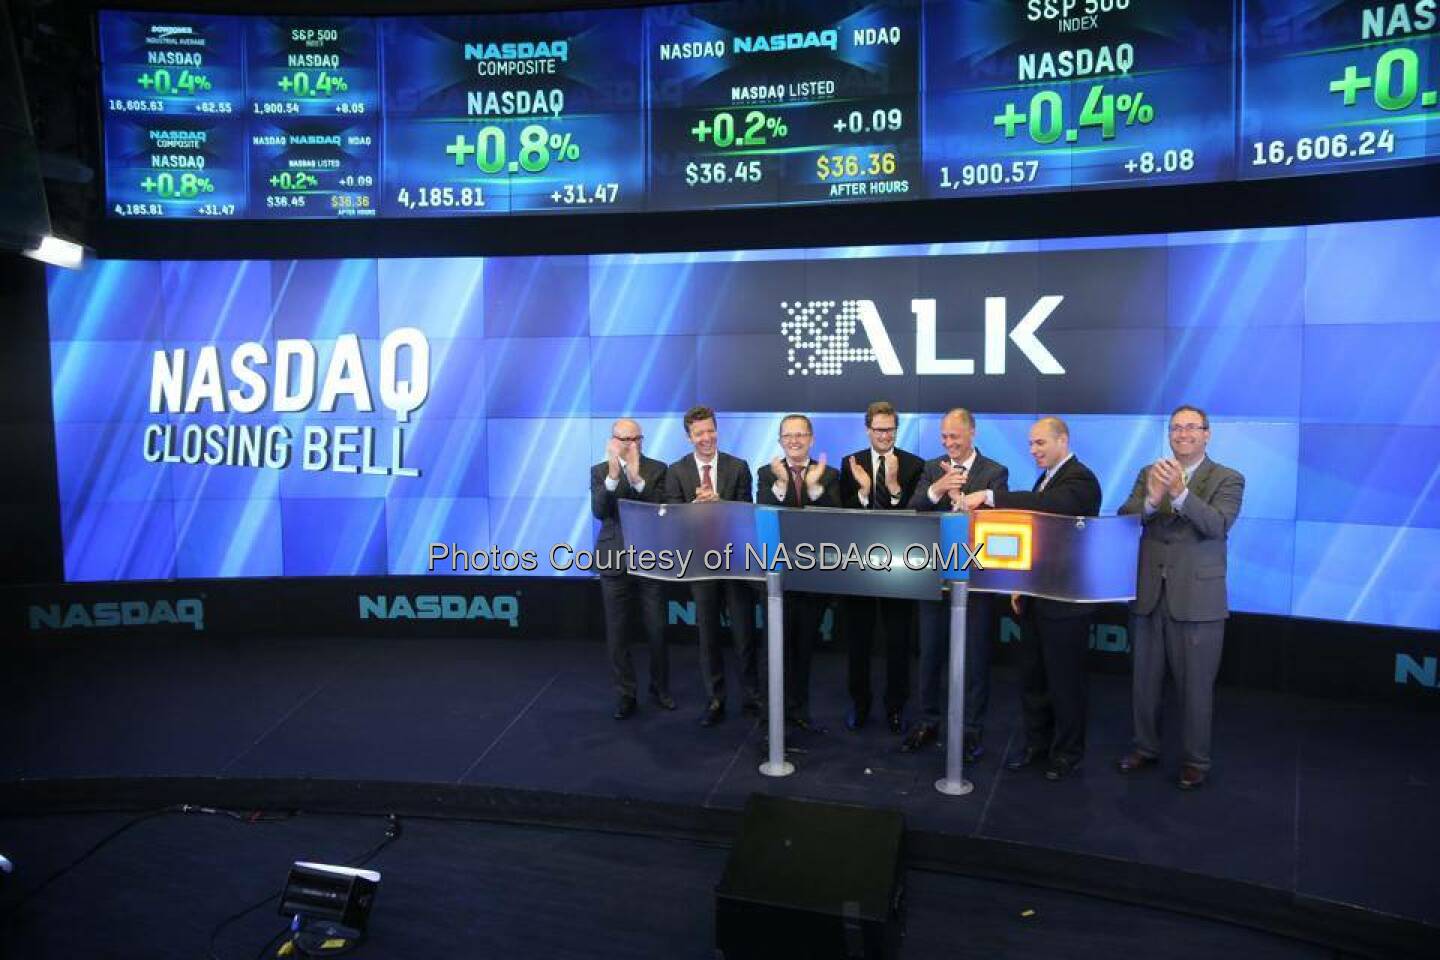 $ALKB: Alk-Abelló rings the Nasdaq OMX Closing Bell - http://facebook.com/NASDAQ